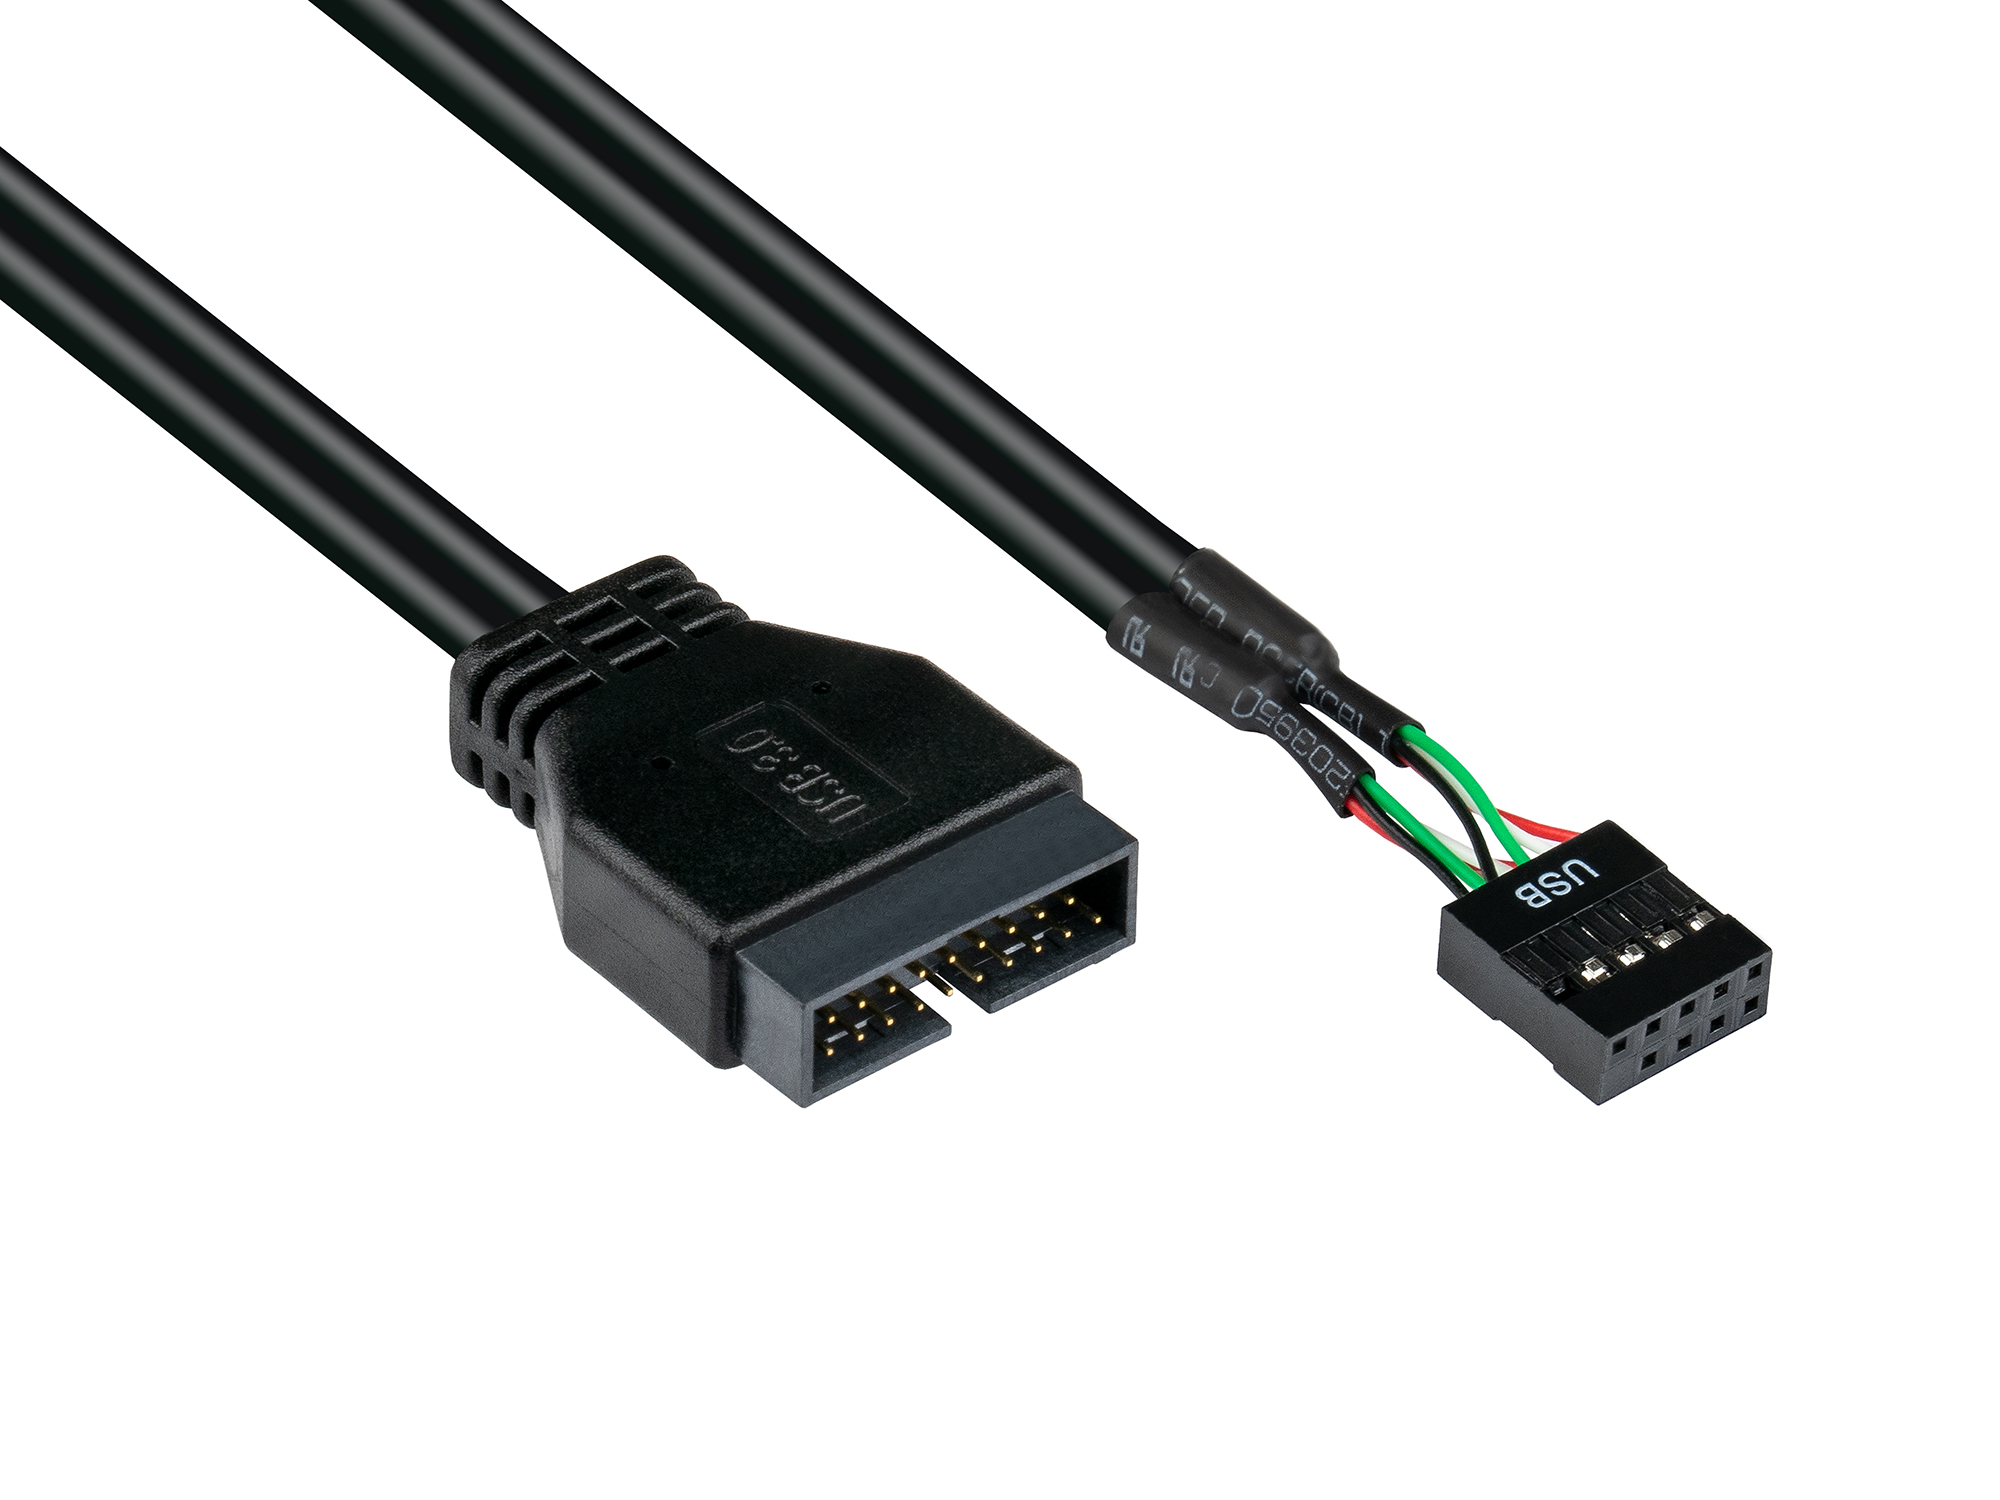 Adapter intern USB 3.0 Pin-Header Stecker an USB 2.0 Pin-Header Buchse, schwarz, 0,6m, Good Connecti